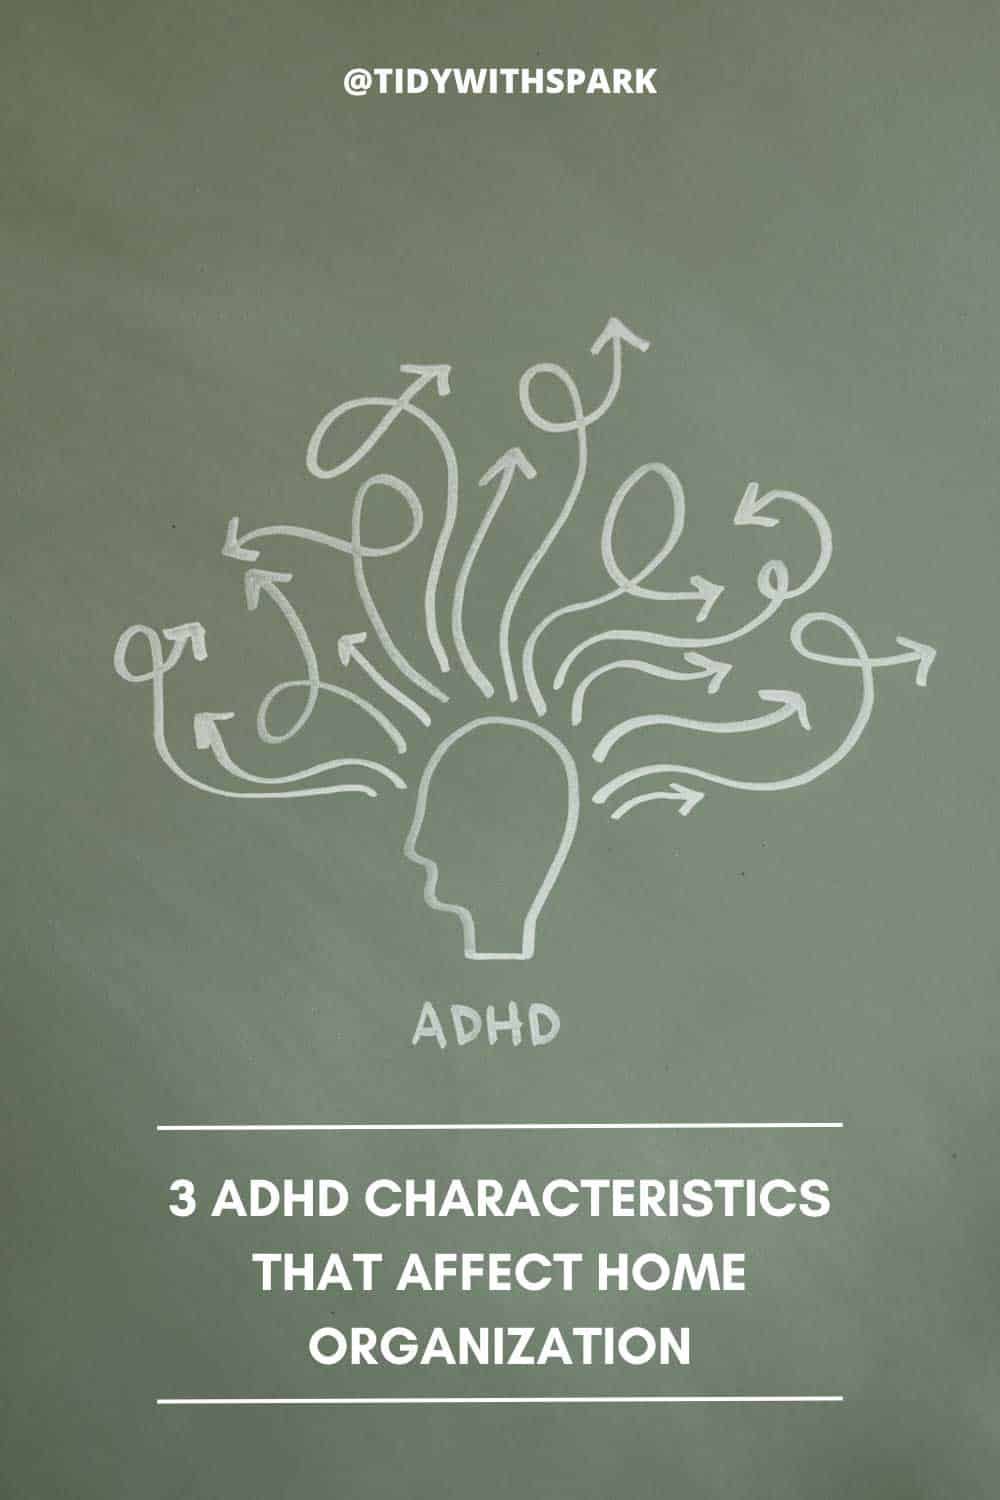 3 ADHD Characteristics that affect home organization